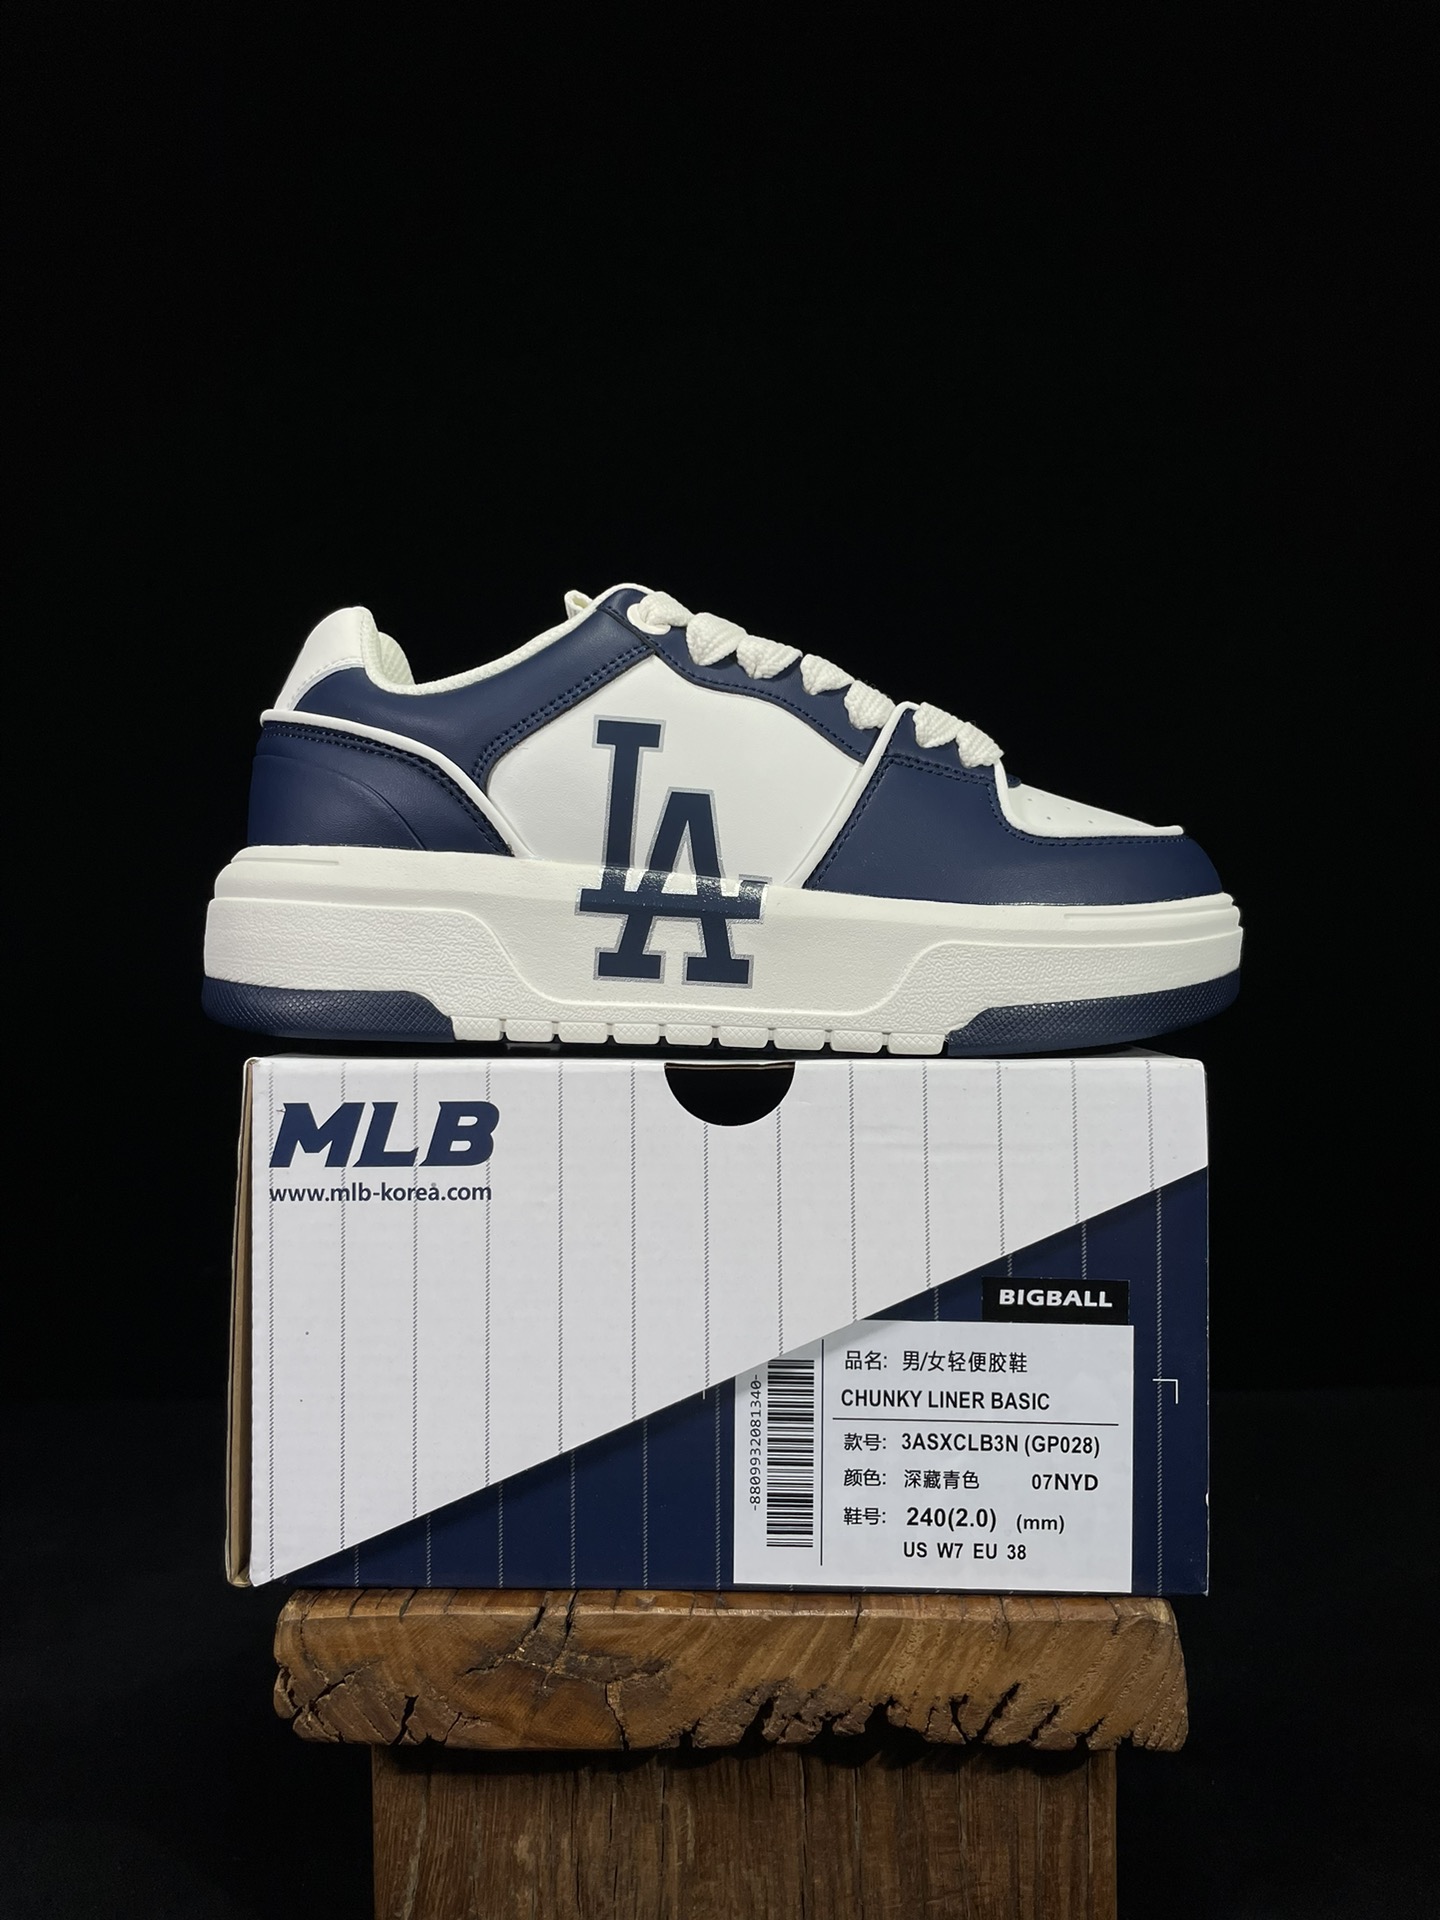 MLBChunkyLinerBasic蓝色增高厚底板鞋代工厂背景最强出品区分市面真标！平台订单高清洁度免